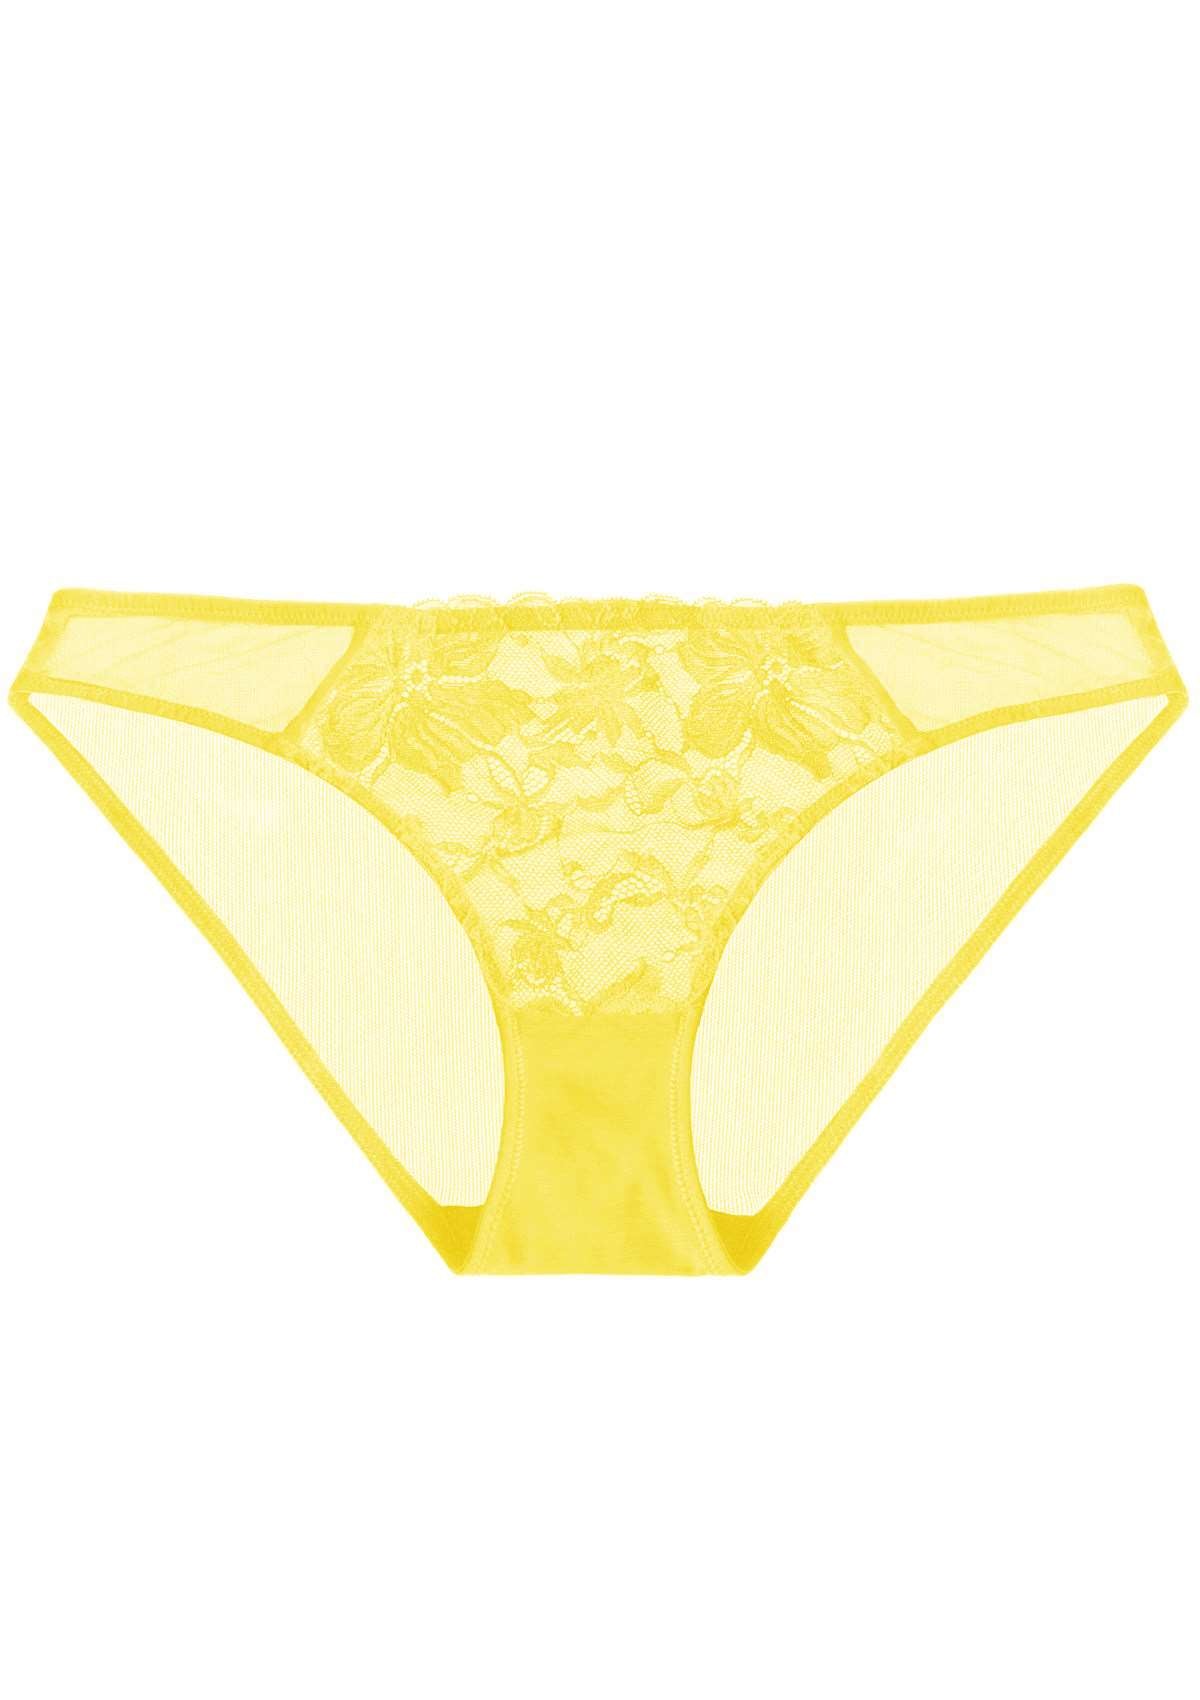 HSIA Mid-Rise Sexy Lace-Trimmed Delicate Breathable Underwear Panty - L / Bikini / Bright Yellow